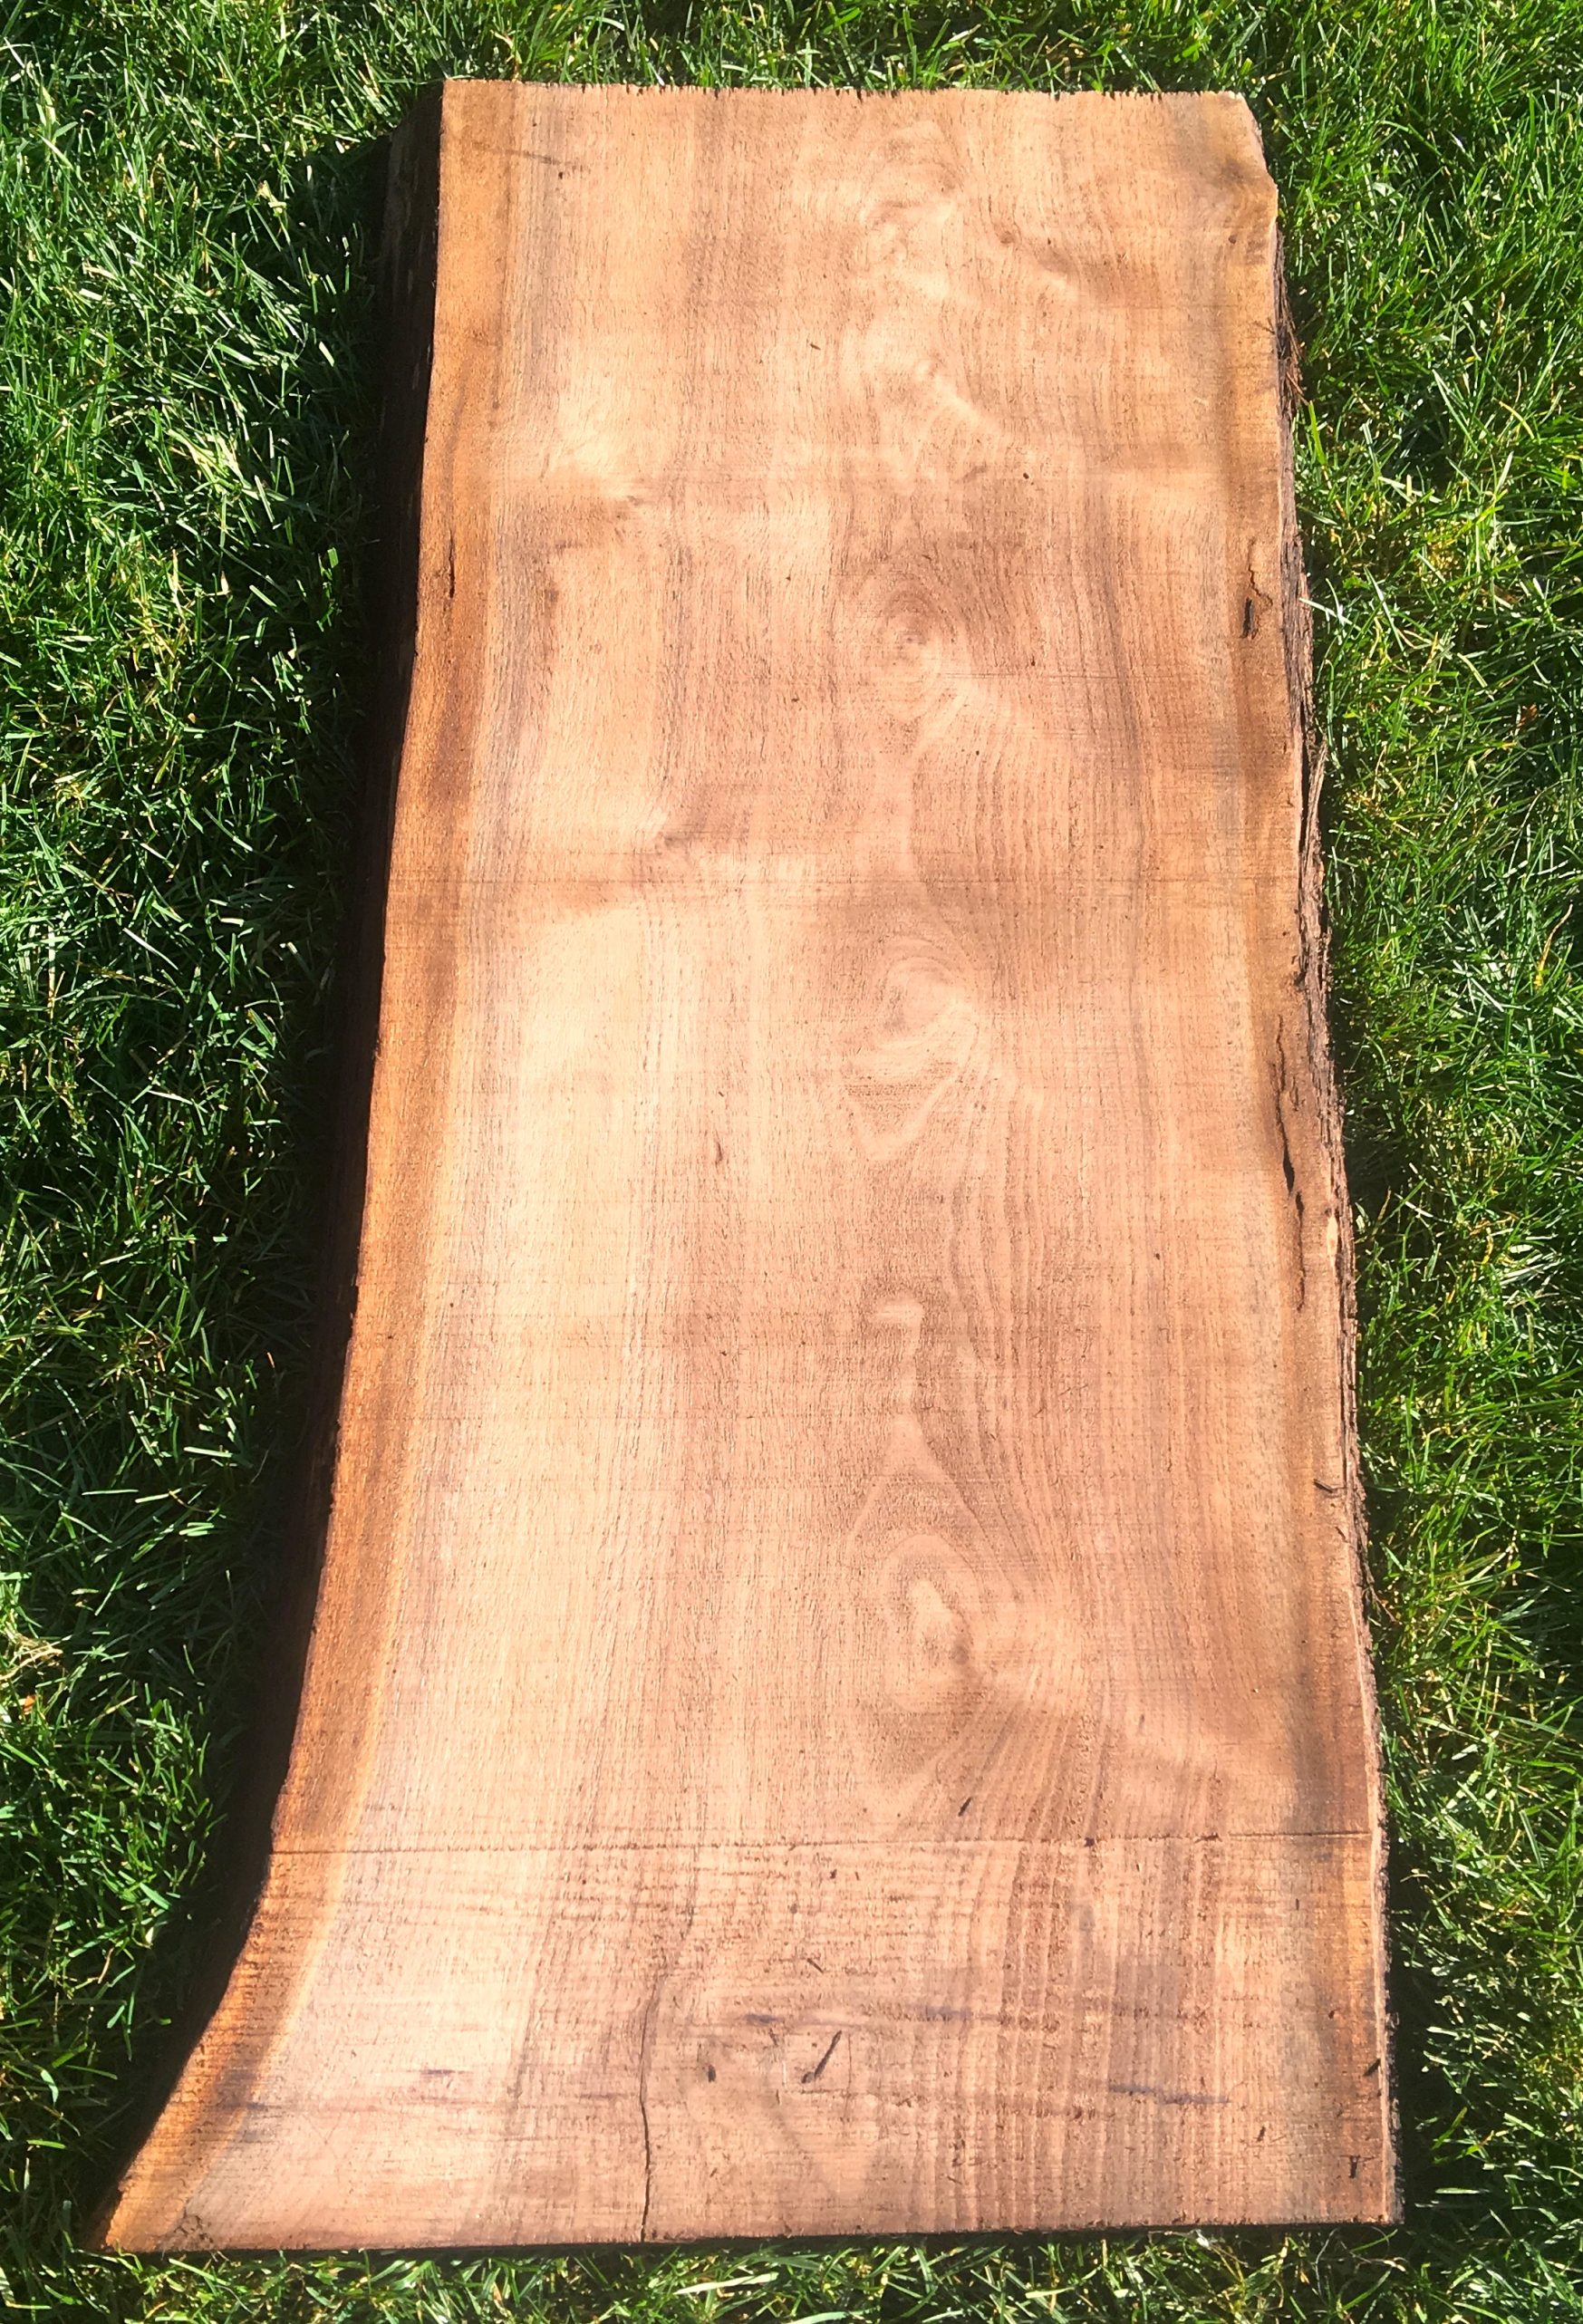 Wood Slabs #1—13-14 inch x- Large